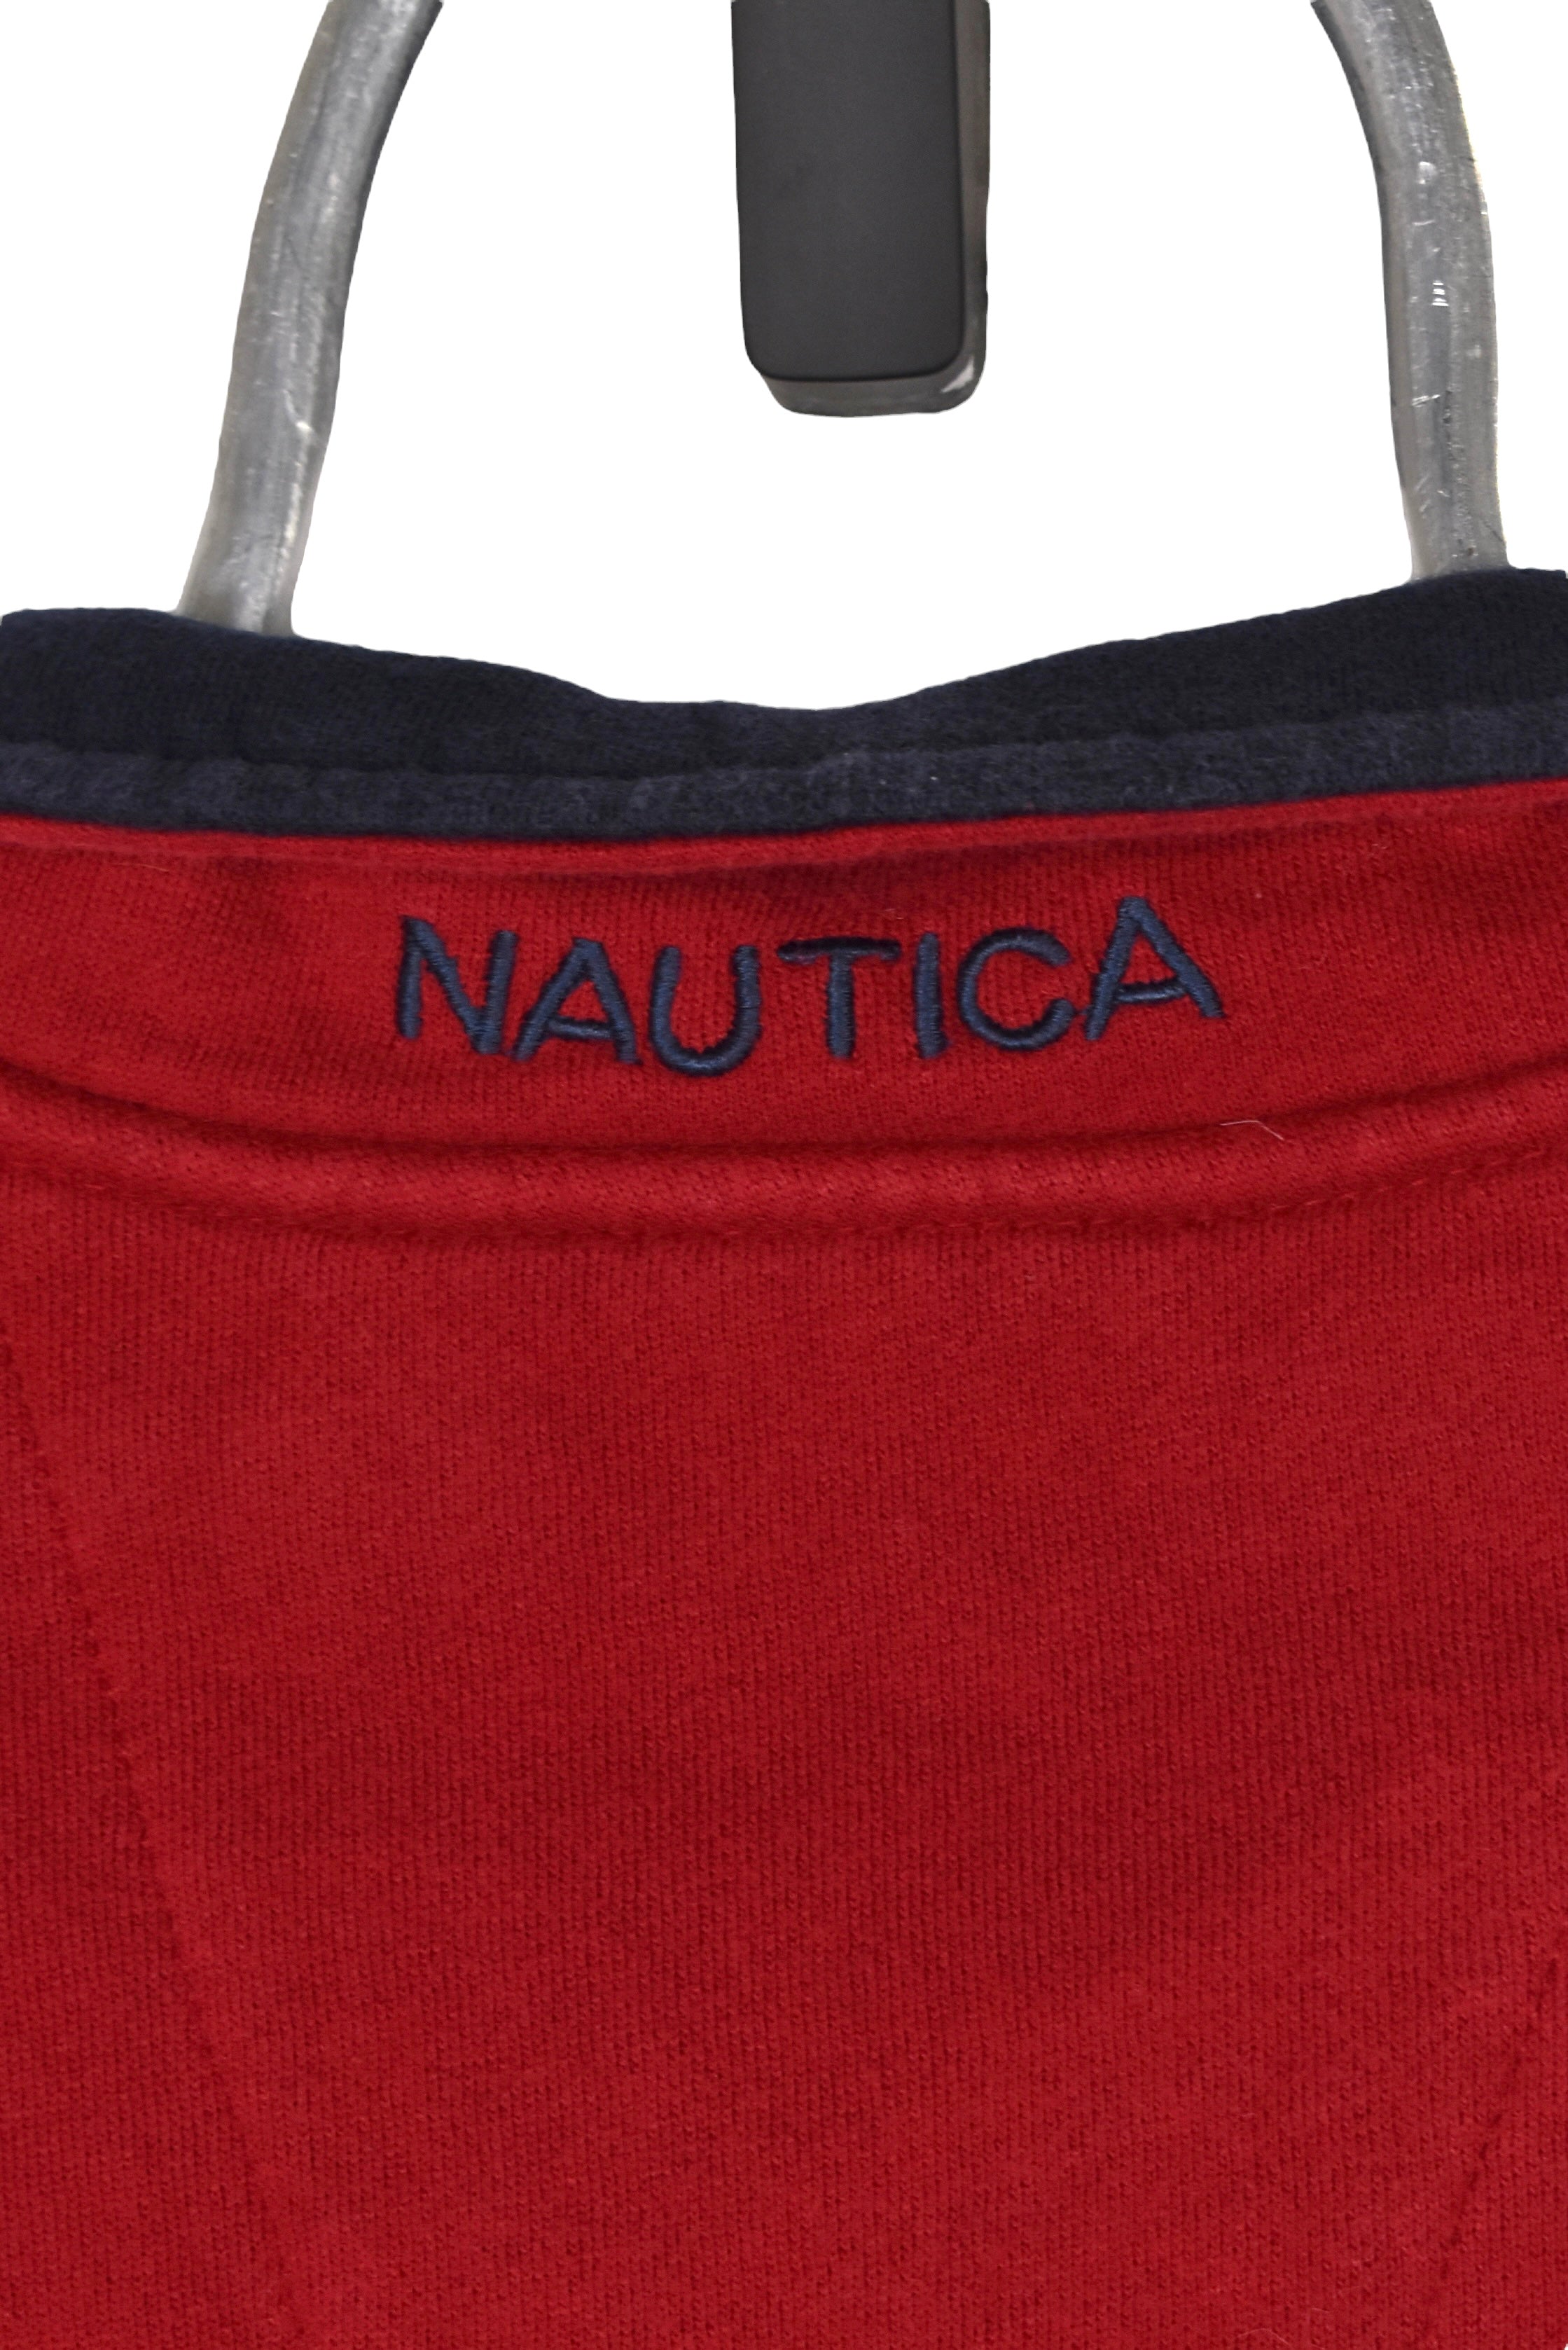 Vintage Nautica 1/4 zip (XL), red embroidered sweatshirt